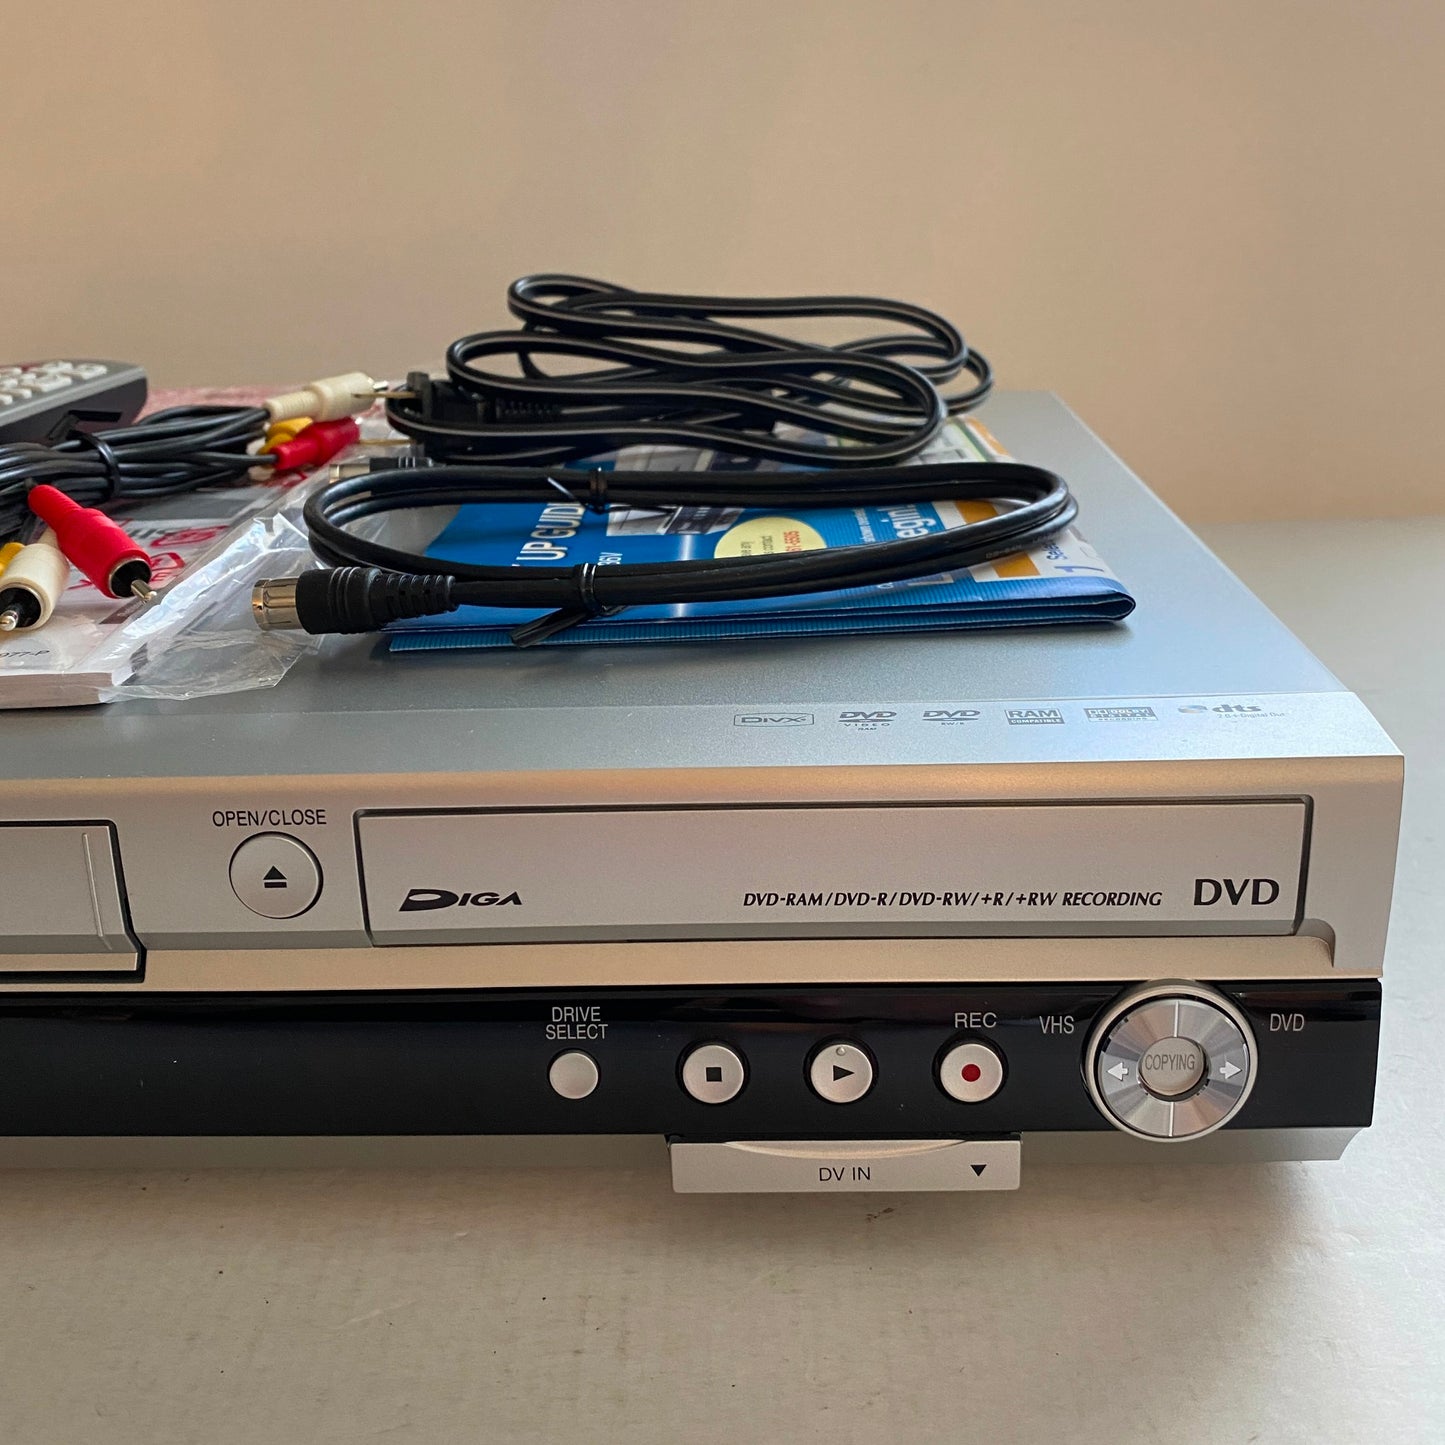 Panasonic VHS DVD Recorder - DMR-ES36V